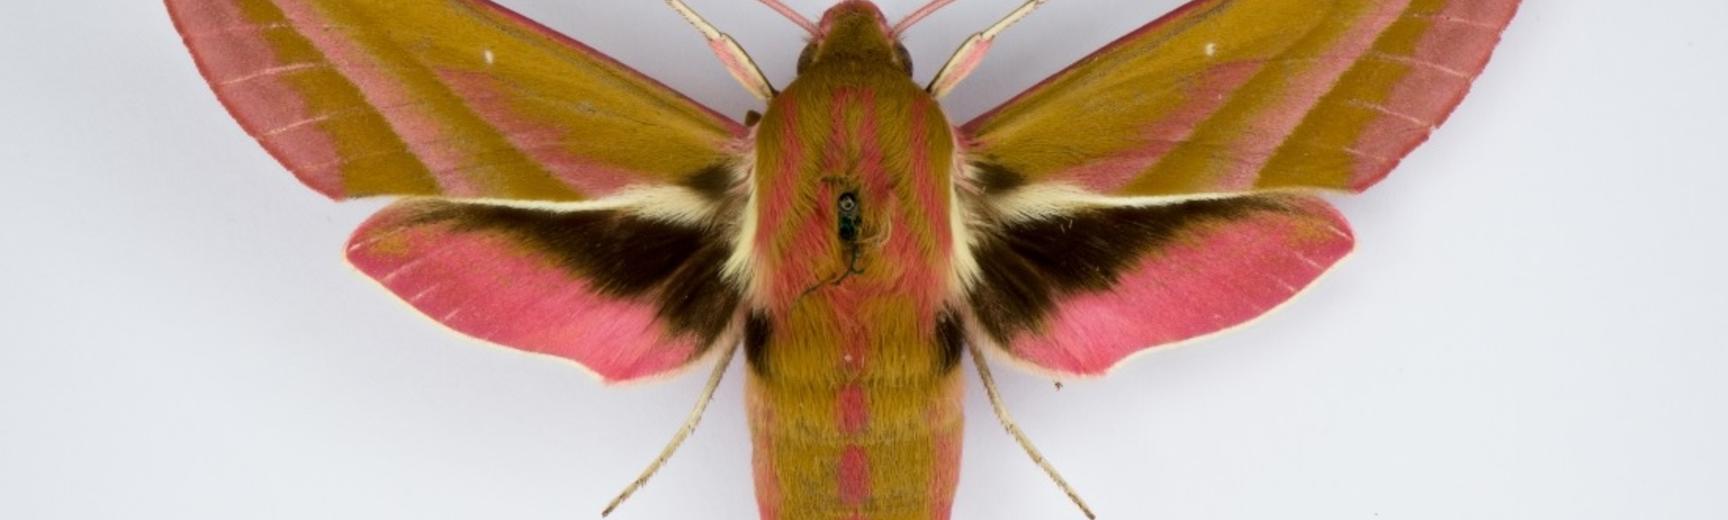 moth specimen photo for paper moth decoration